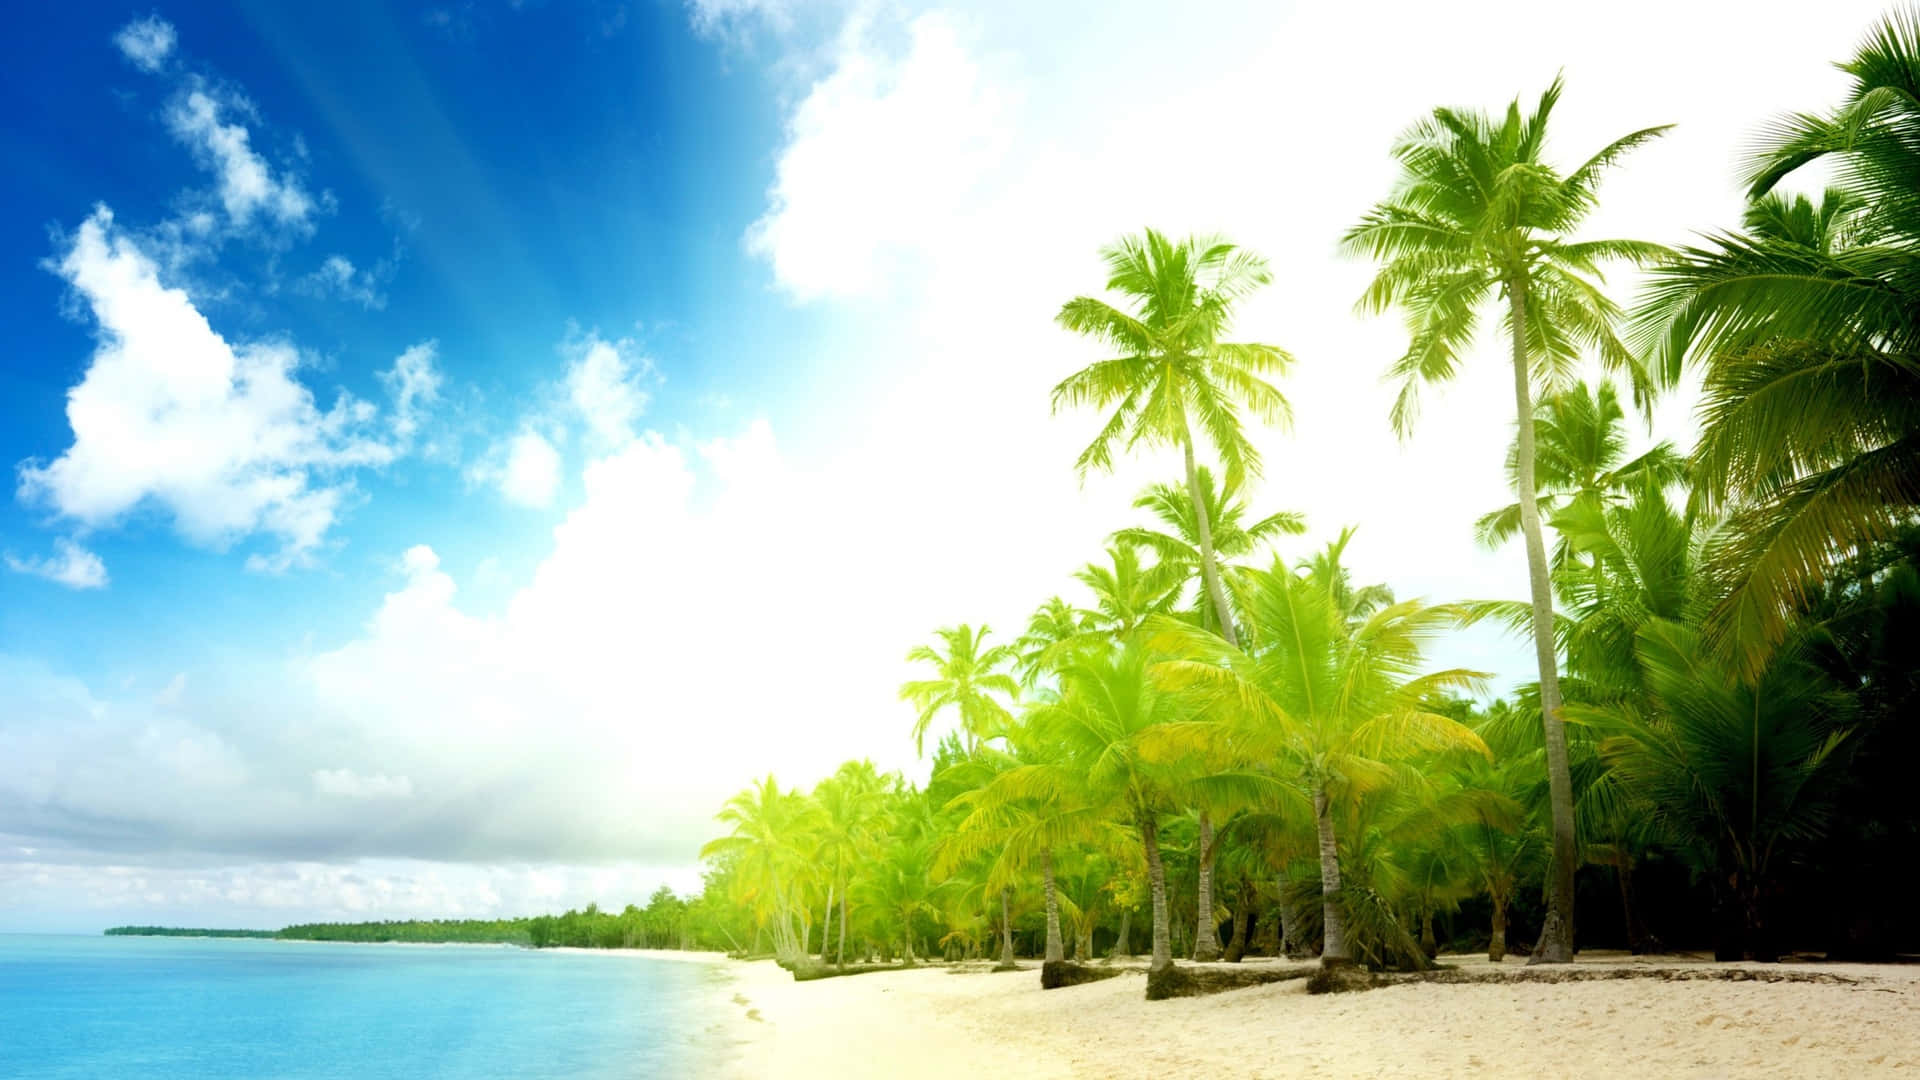 Enjoy the perfect tranquil getaway on Palm Tree Beach Wallpaper